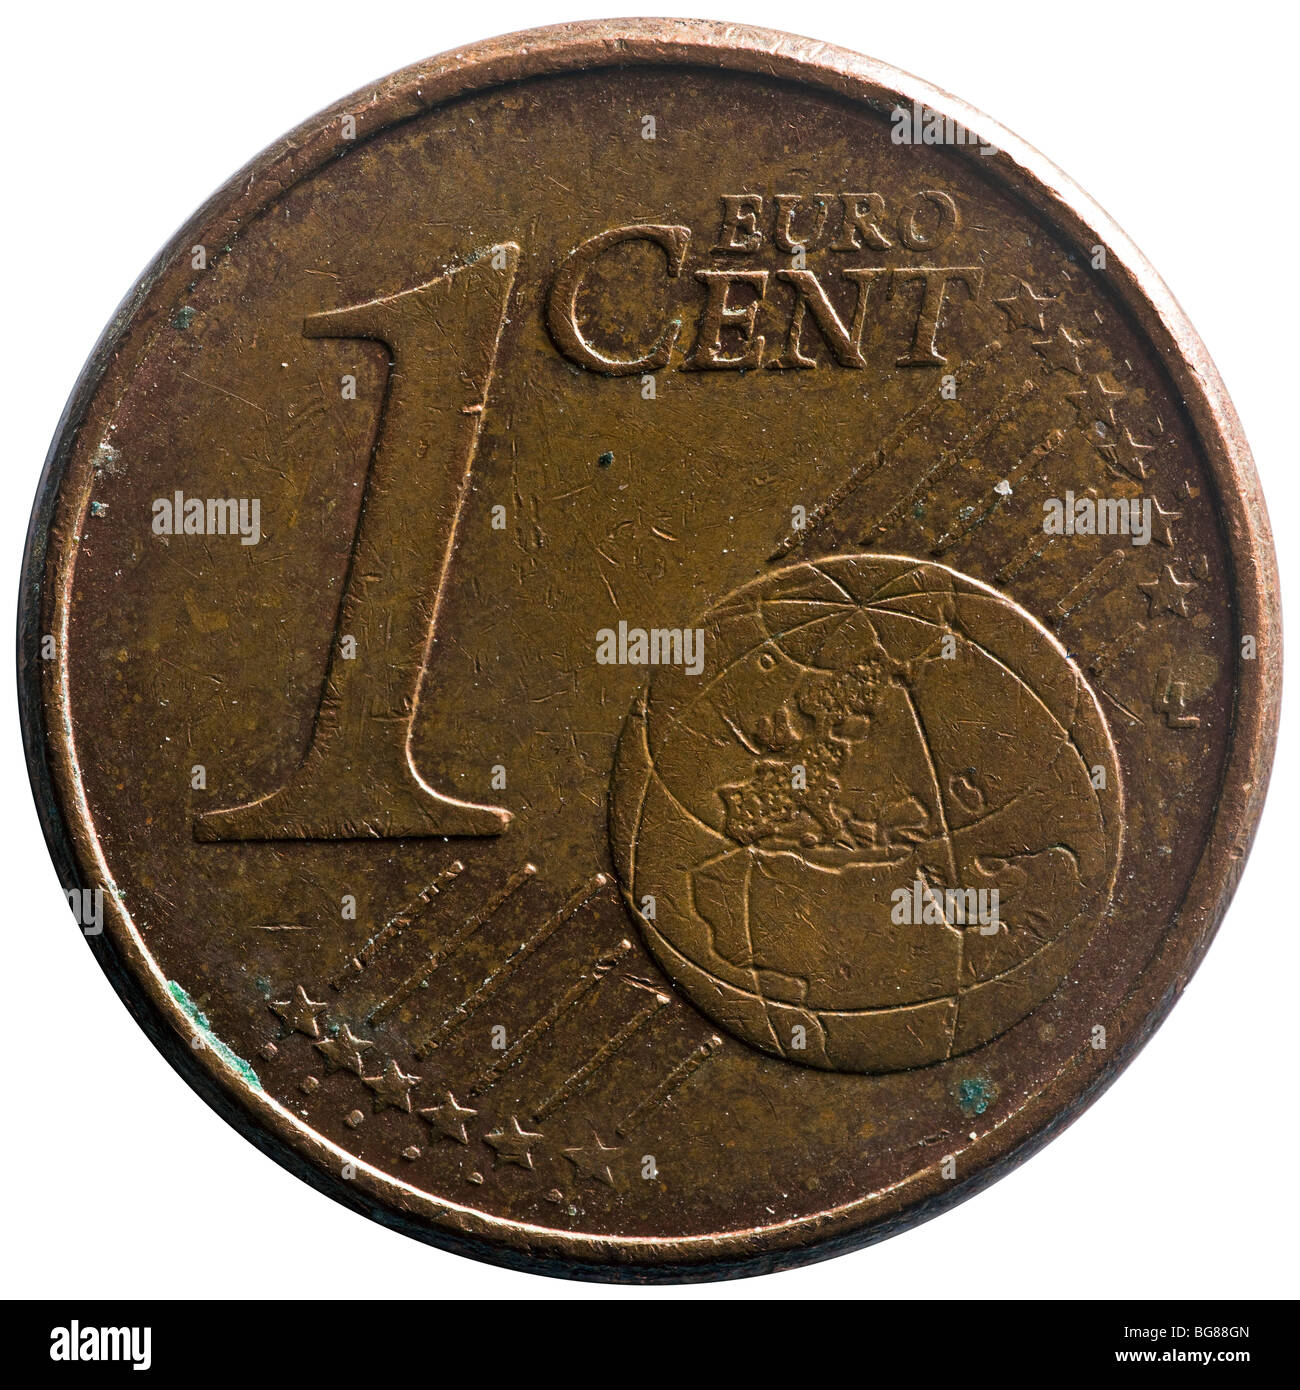 A high-definition photograph of an old one cent Euro coin. Macrophotographie d'une vieille pièce d'un centime d'euro. Stock Photo